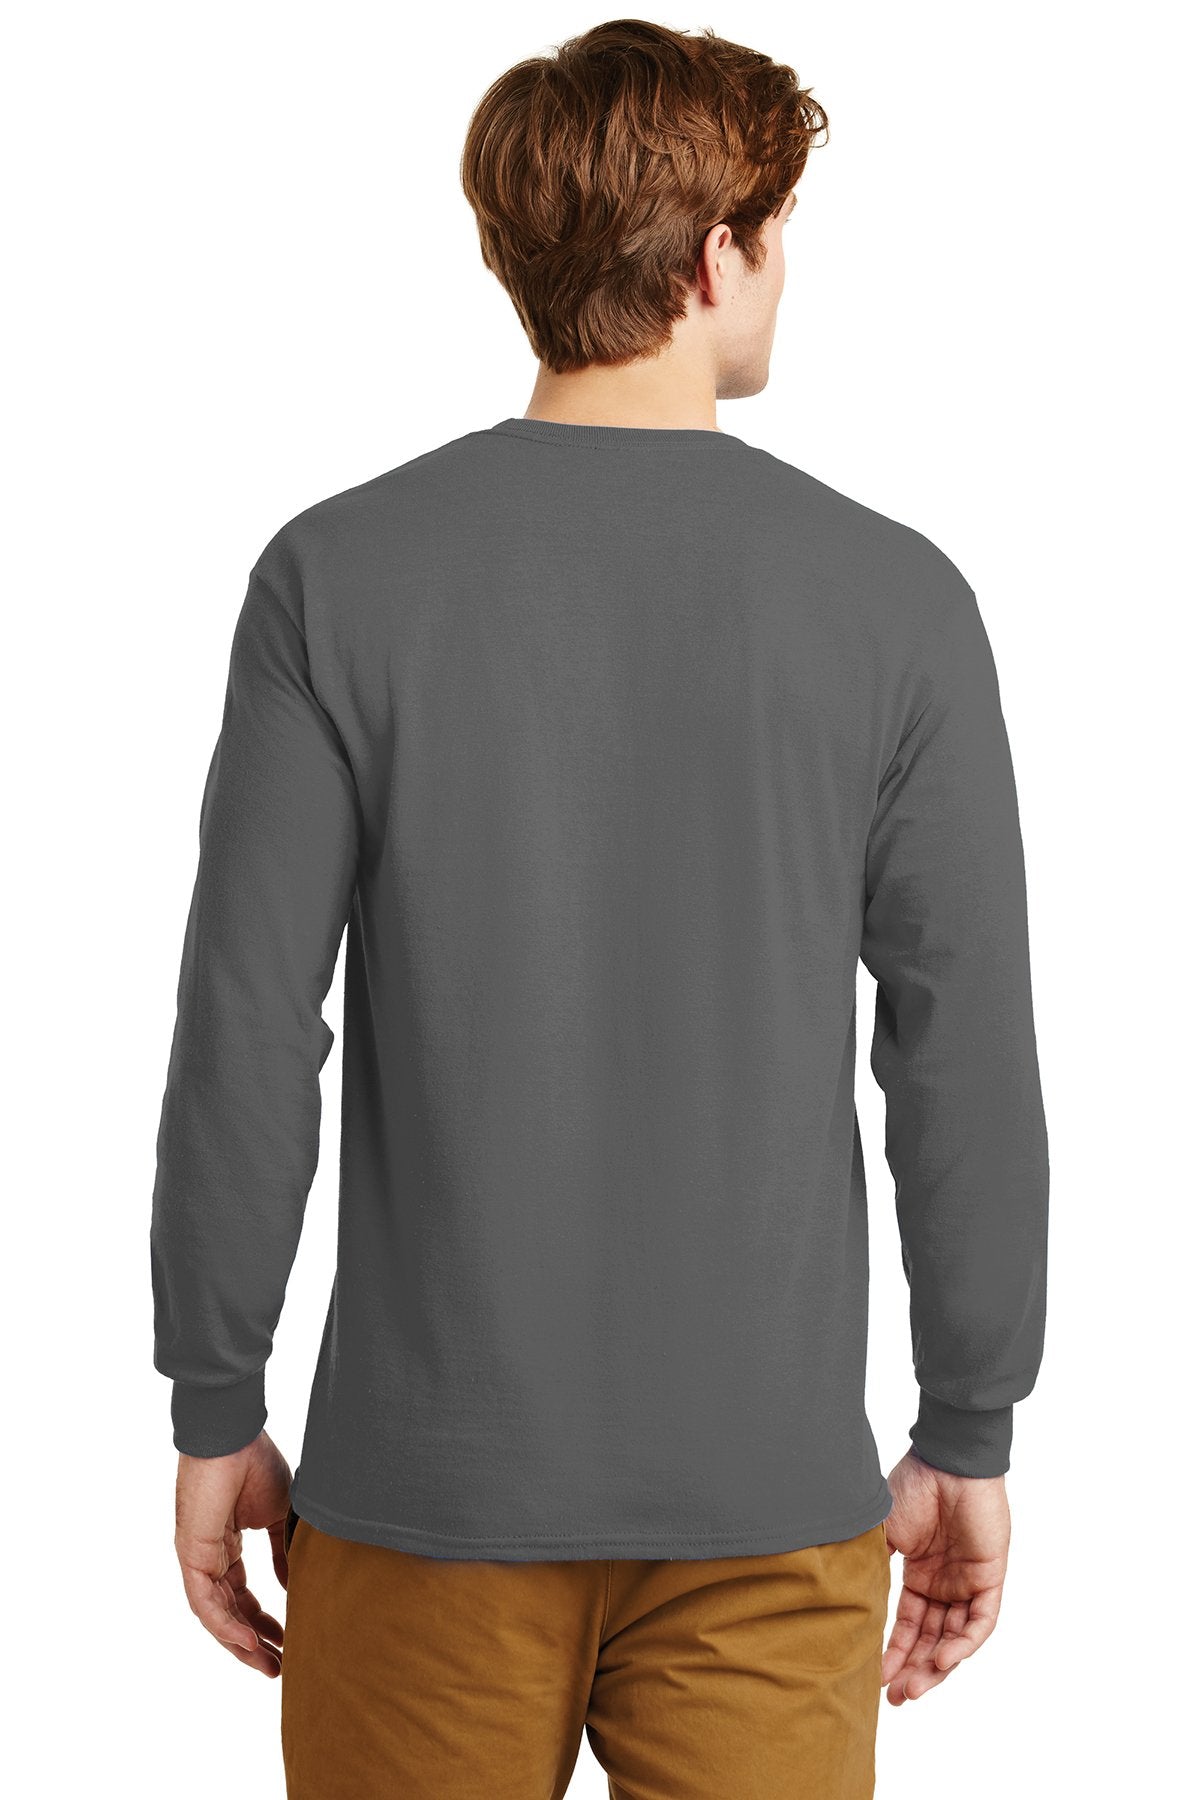 gildan ultra cotton long sleeve t shirt g2400 charcoal